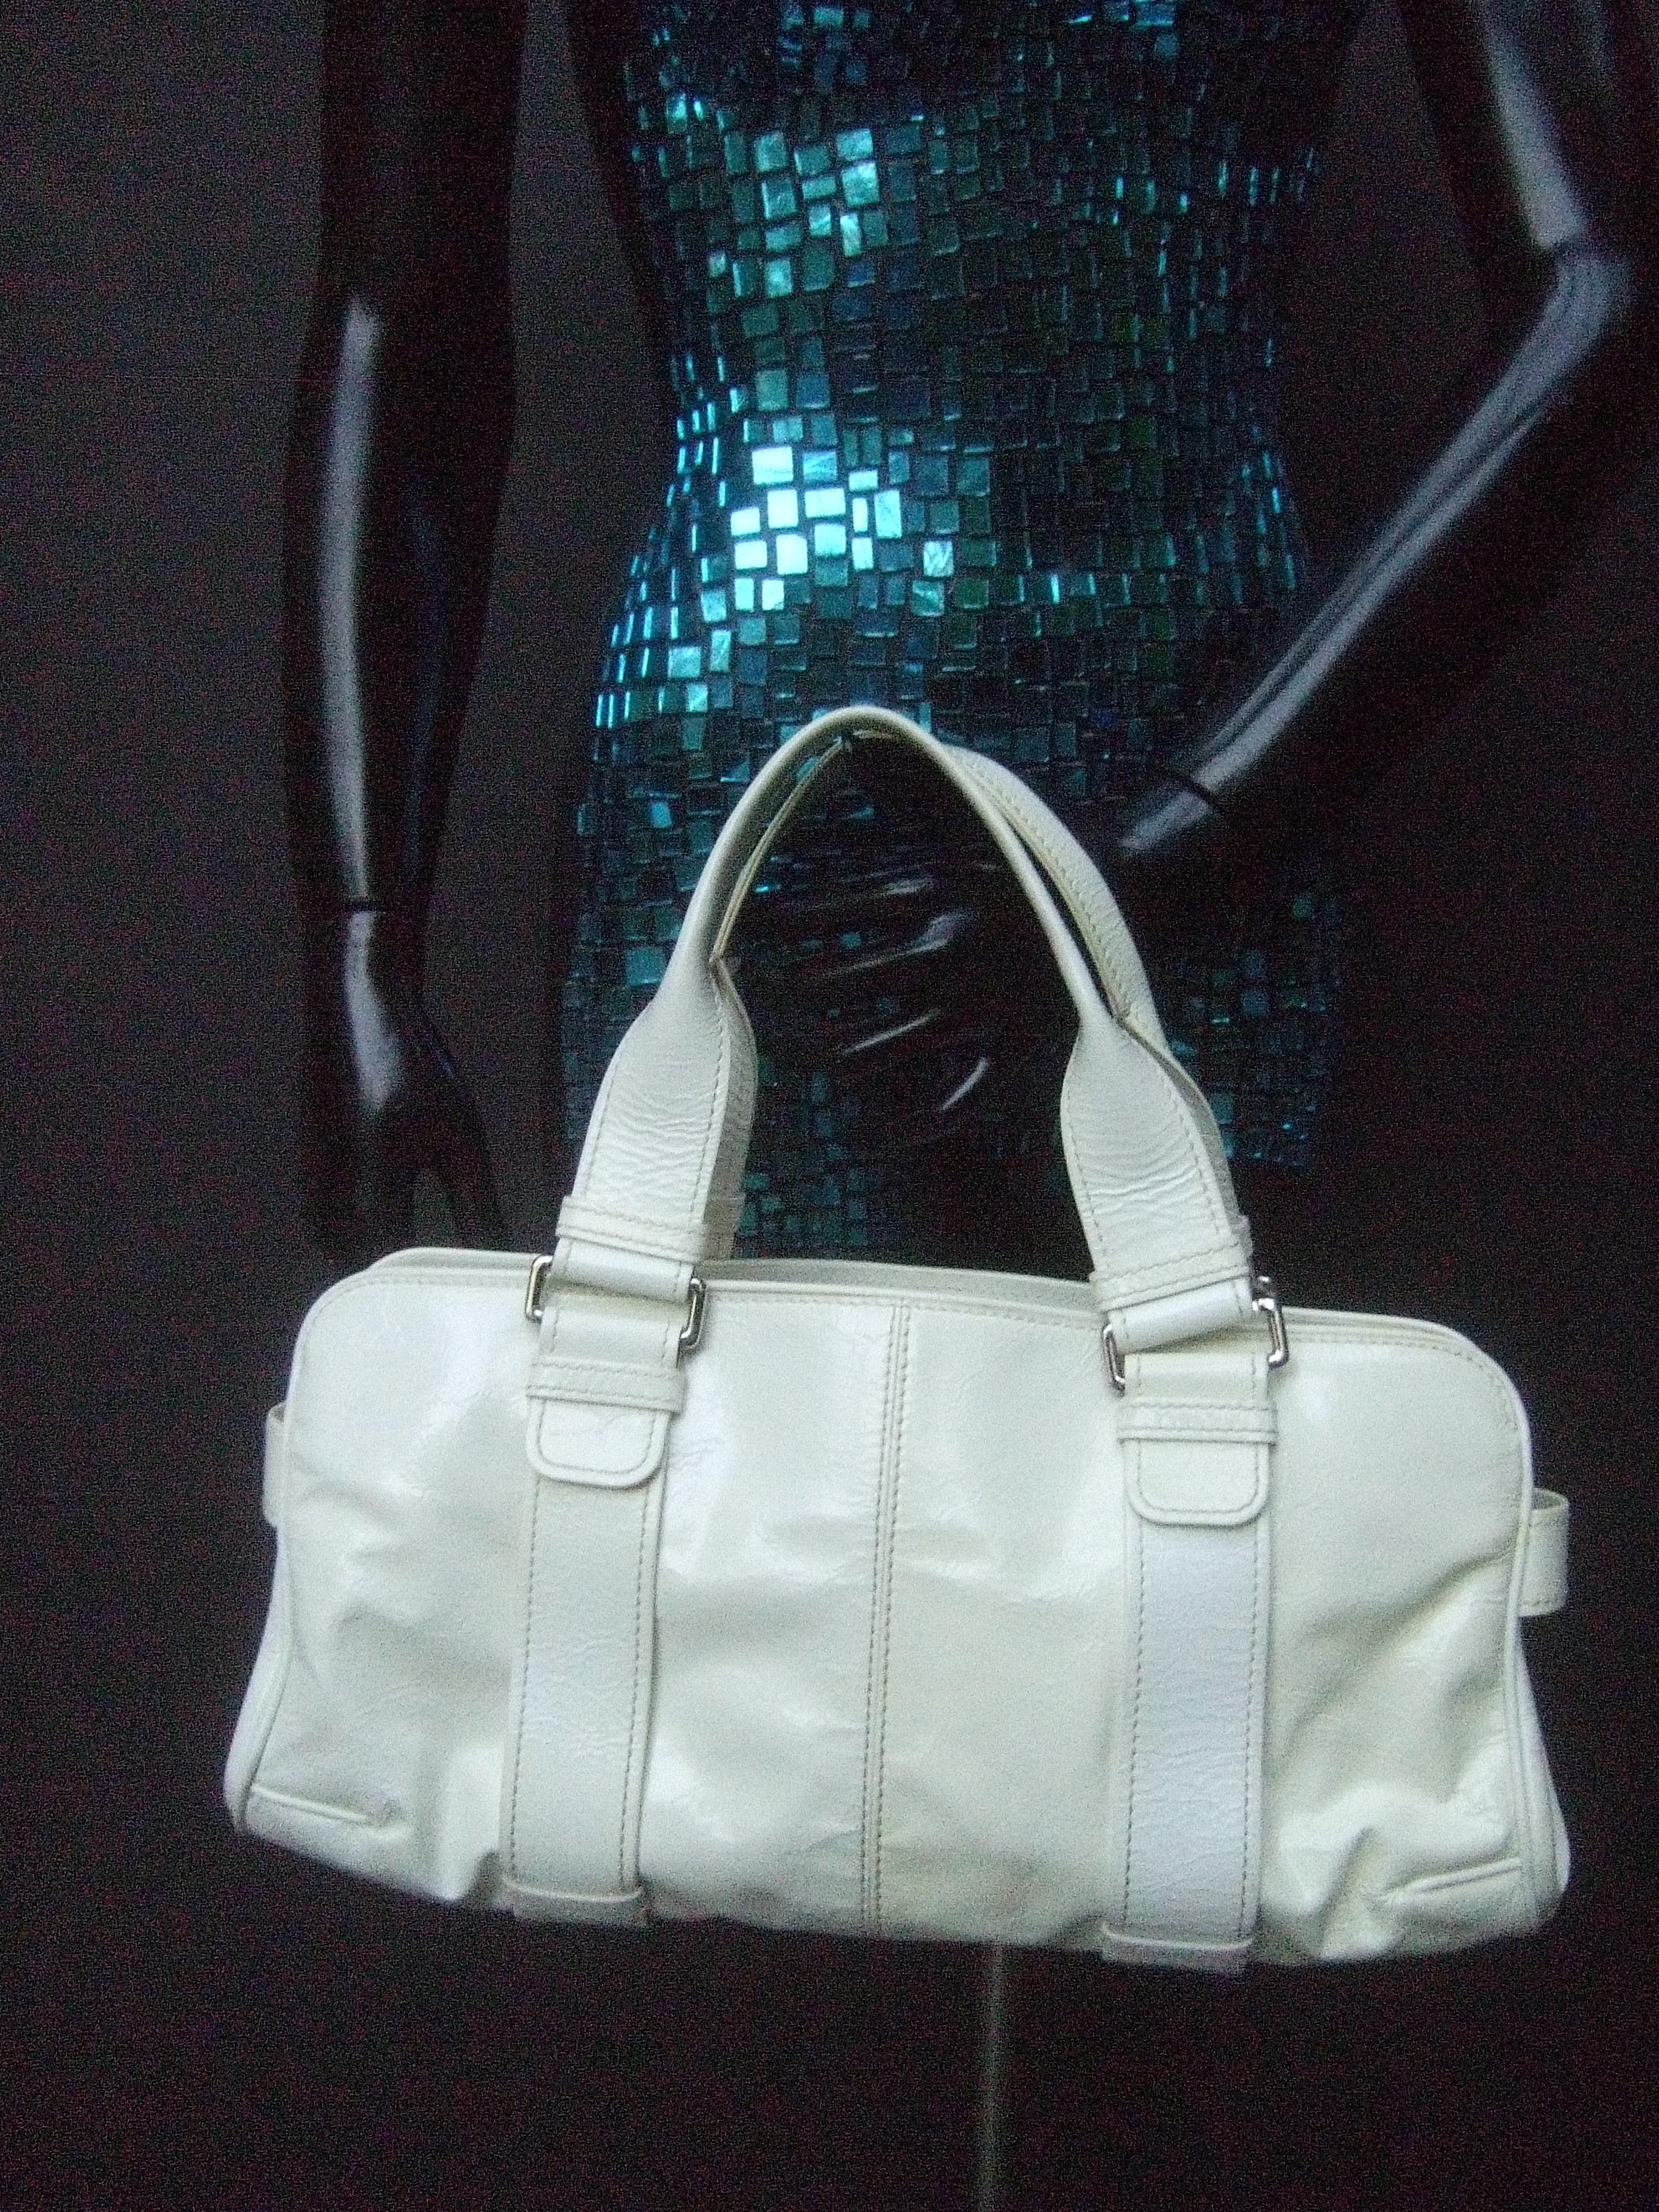 Roger Vivier Paris White Patent Leather Chrome Buckle Italian Handbag c 1990s For Sale 2